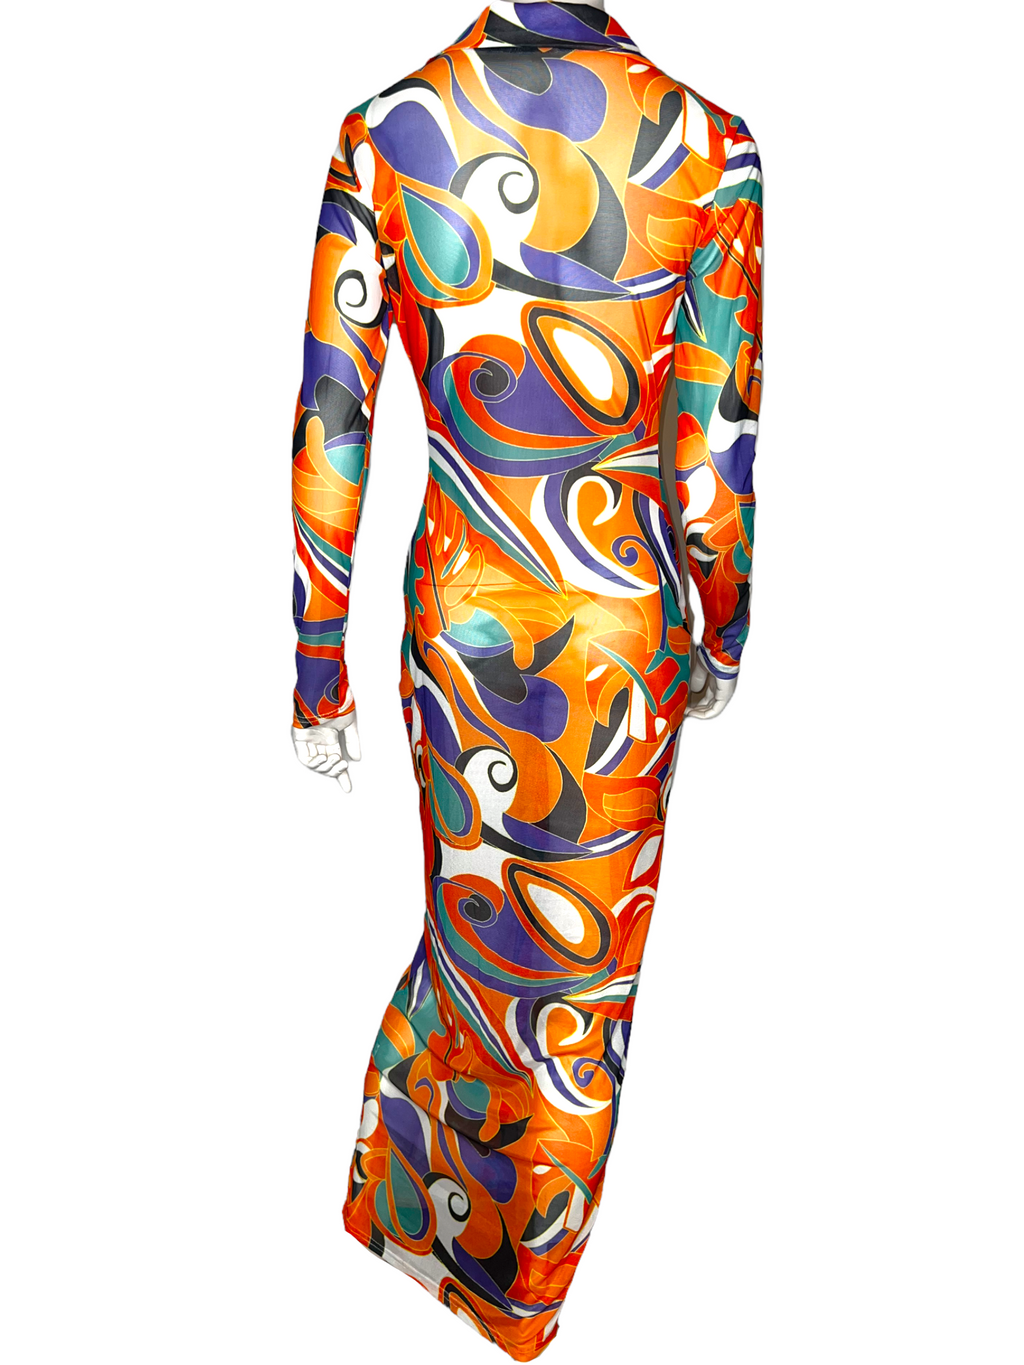 Mesh Digital Print Orange Button Up Dress